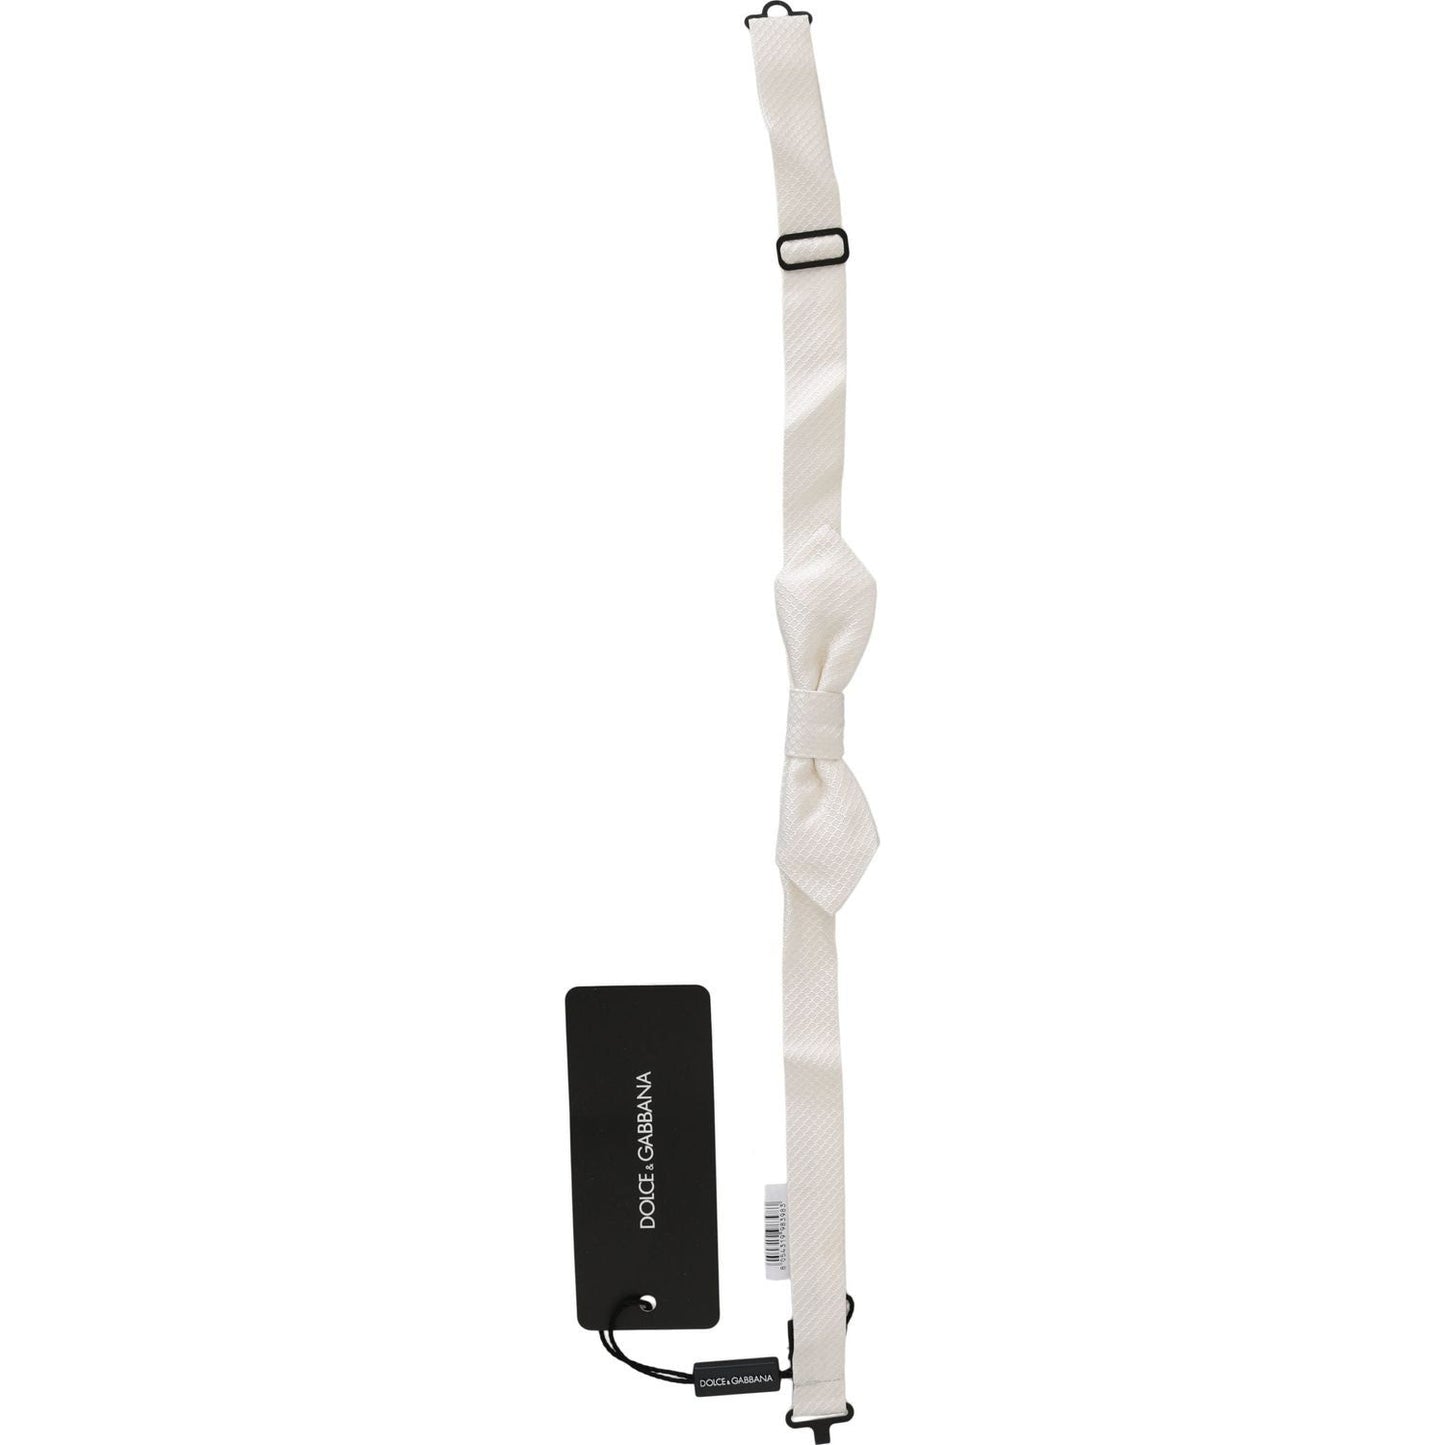 Dolce & Gabbana Elegant White Silk Bow Tie white-100-silk-slim-adjustable-neck-papillon-men-tie Bow Tie IMG_3988-scaled.jpg